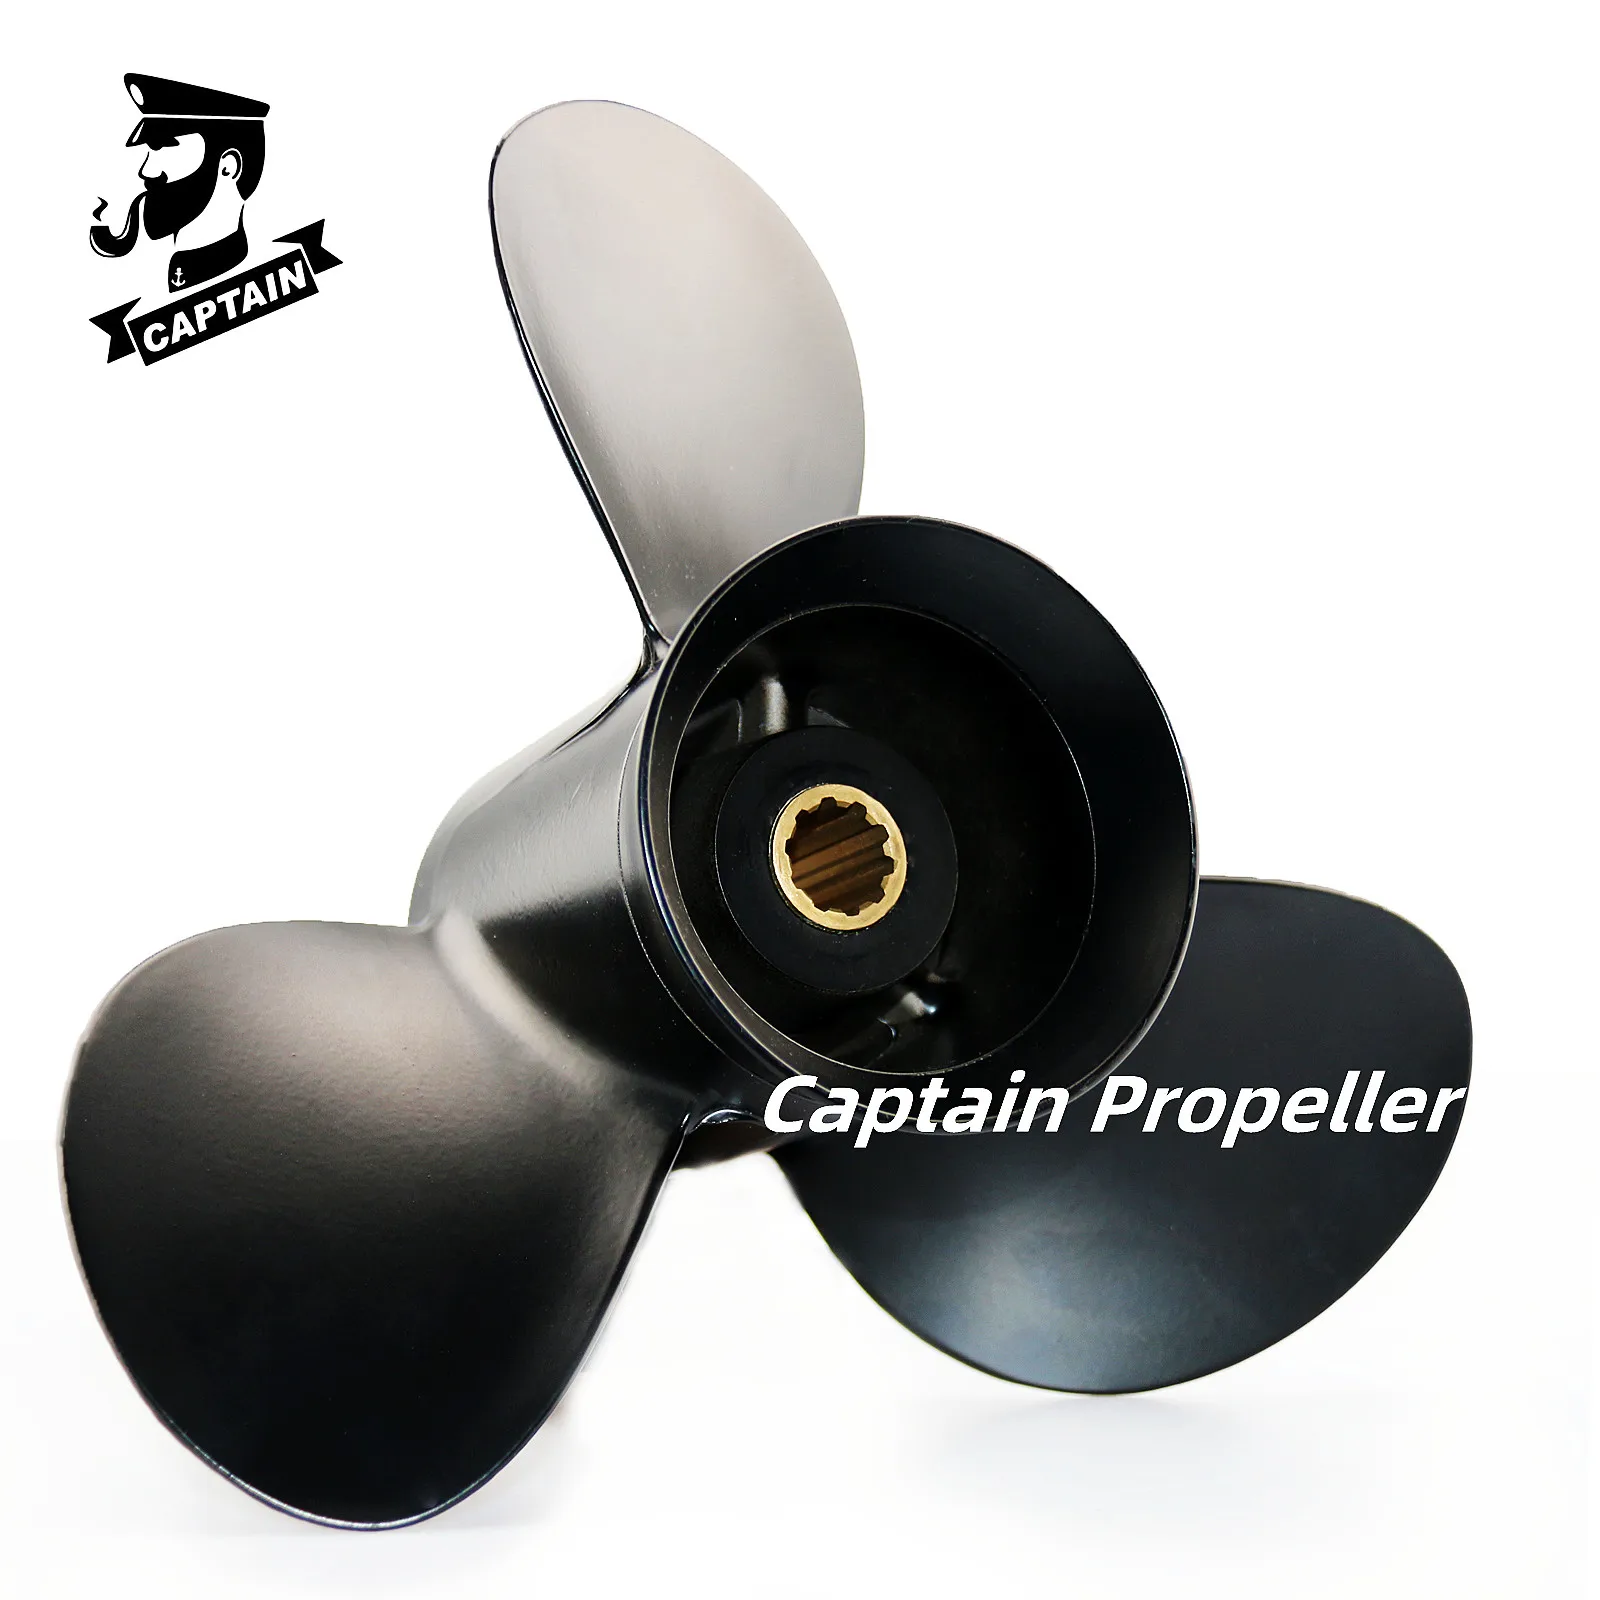 Captain Boat Propeller 10.25x13 Fit Mercury Mariner Outboard Engines 25 28 30 HP Motor Aluminum Screw 3 Blade 10 Tooth Spline